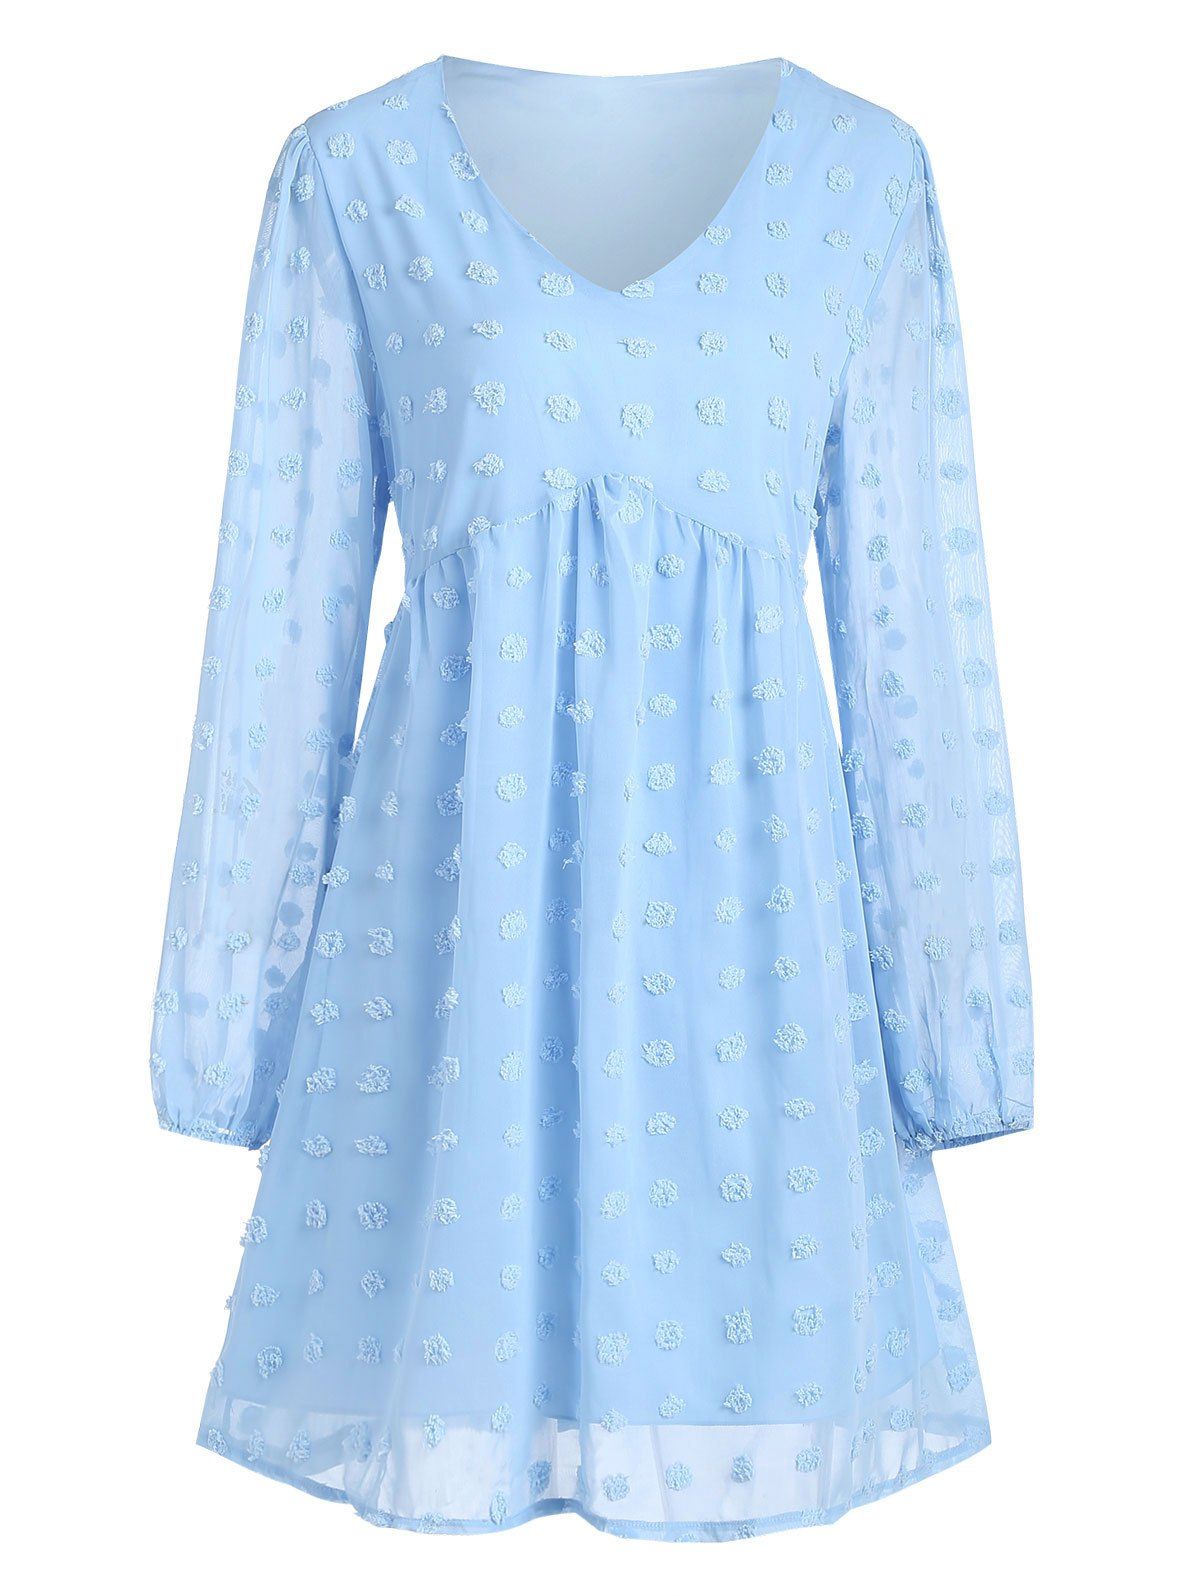 V Neck Swiss Dot Straight Mini Dress - LIGHT BLUE L